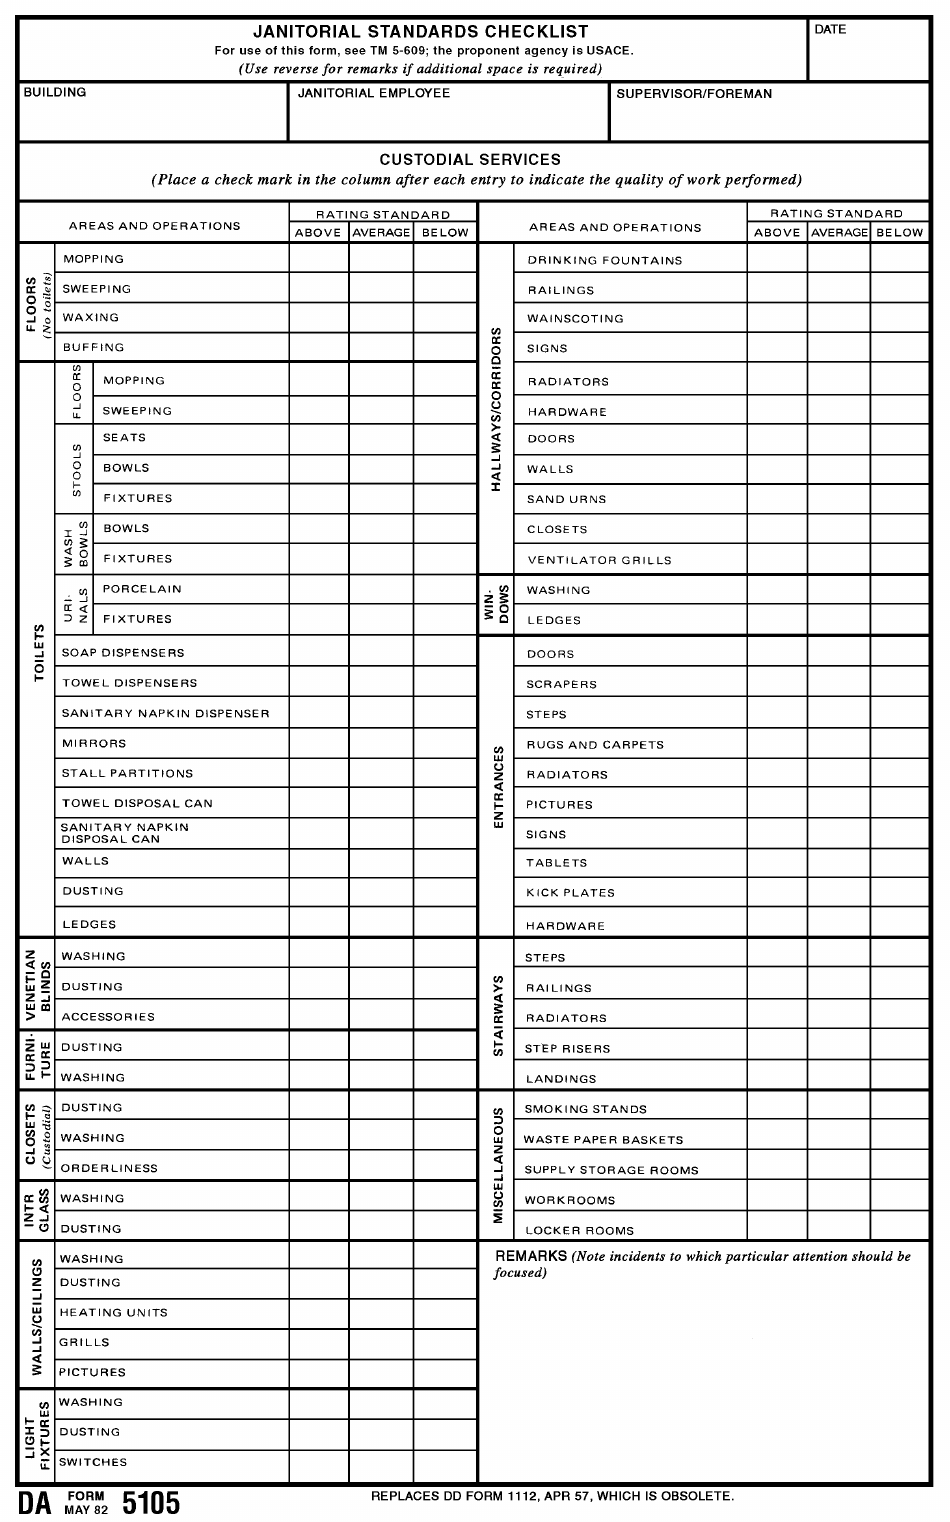 DA Form 5105 Janitorial Standards Checklist, Page 1